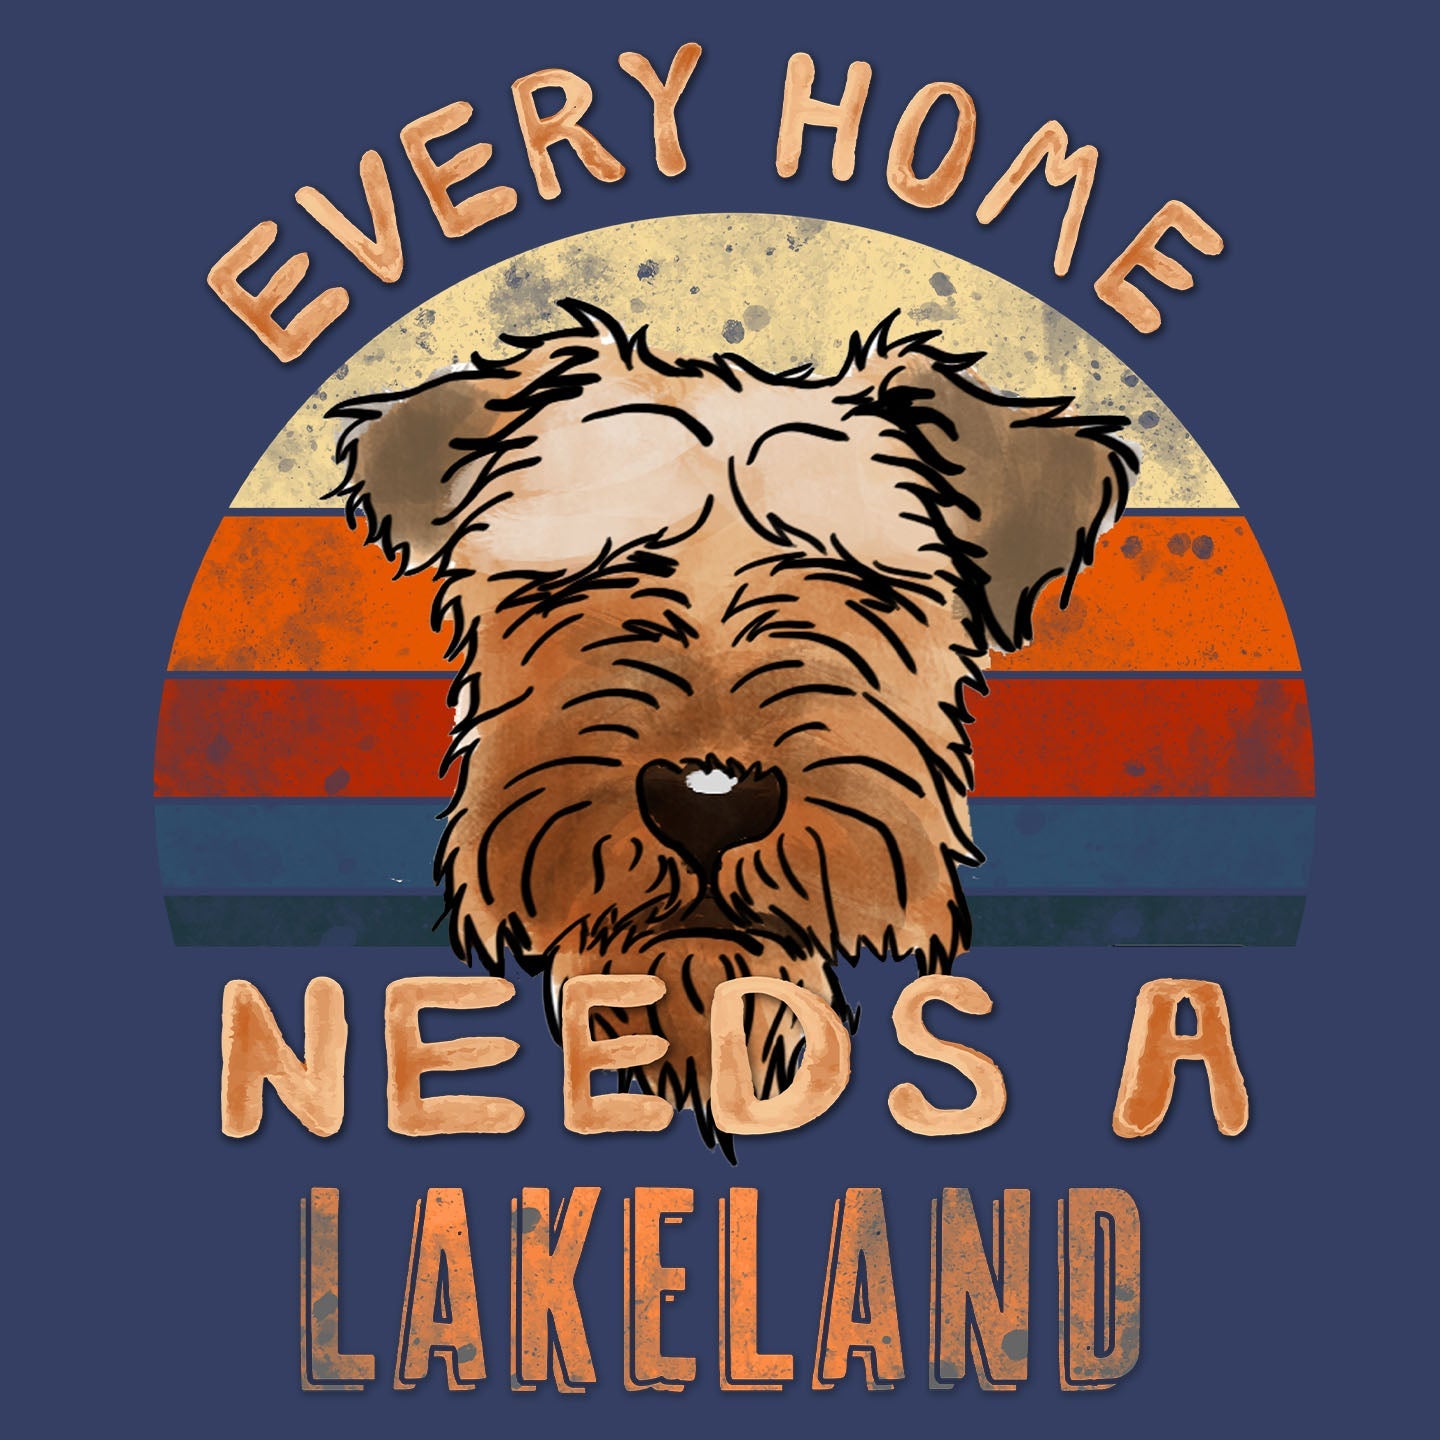 Every Home Needs a Lakeland Terrier - Adult Unisex Crewneck Sweatshirt